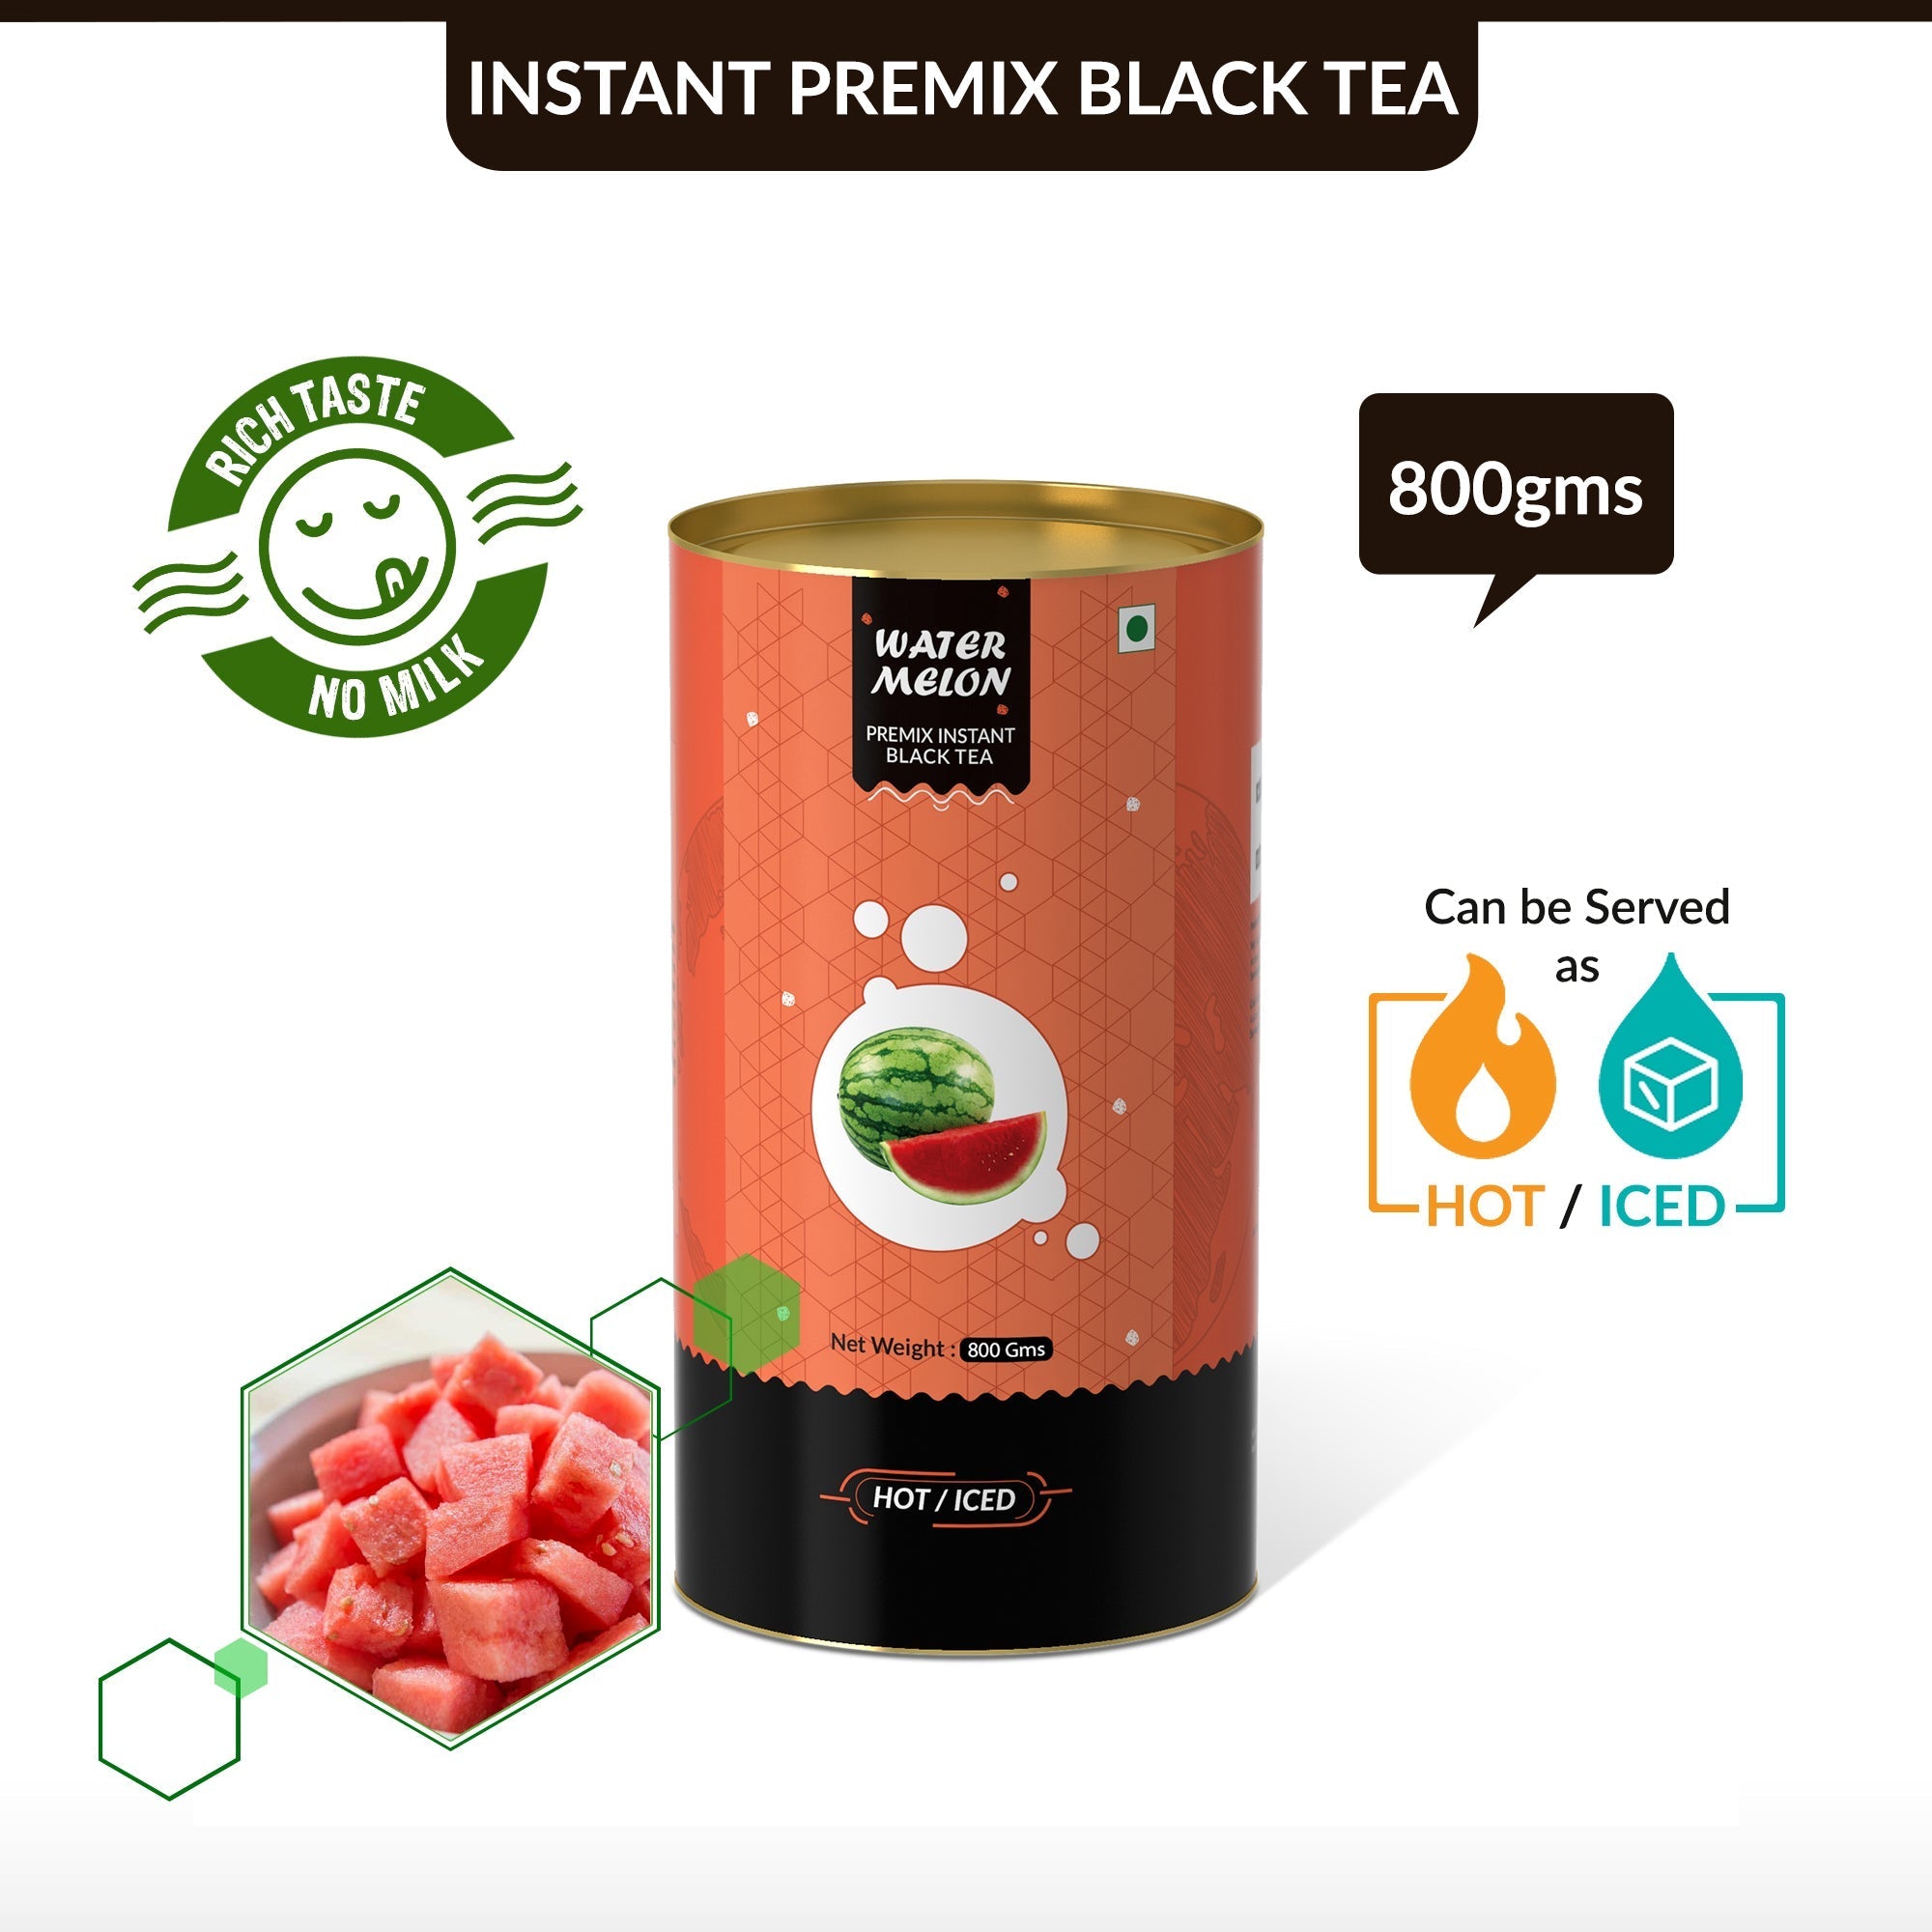 Watermelon Flavored Instant Black Tea - 800 gms